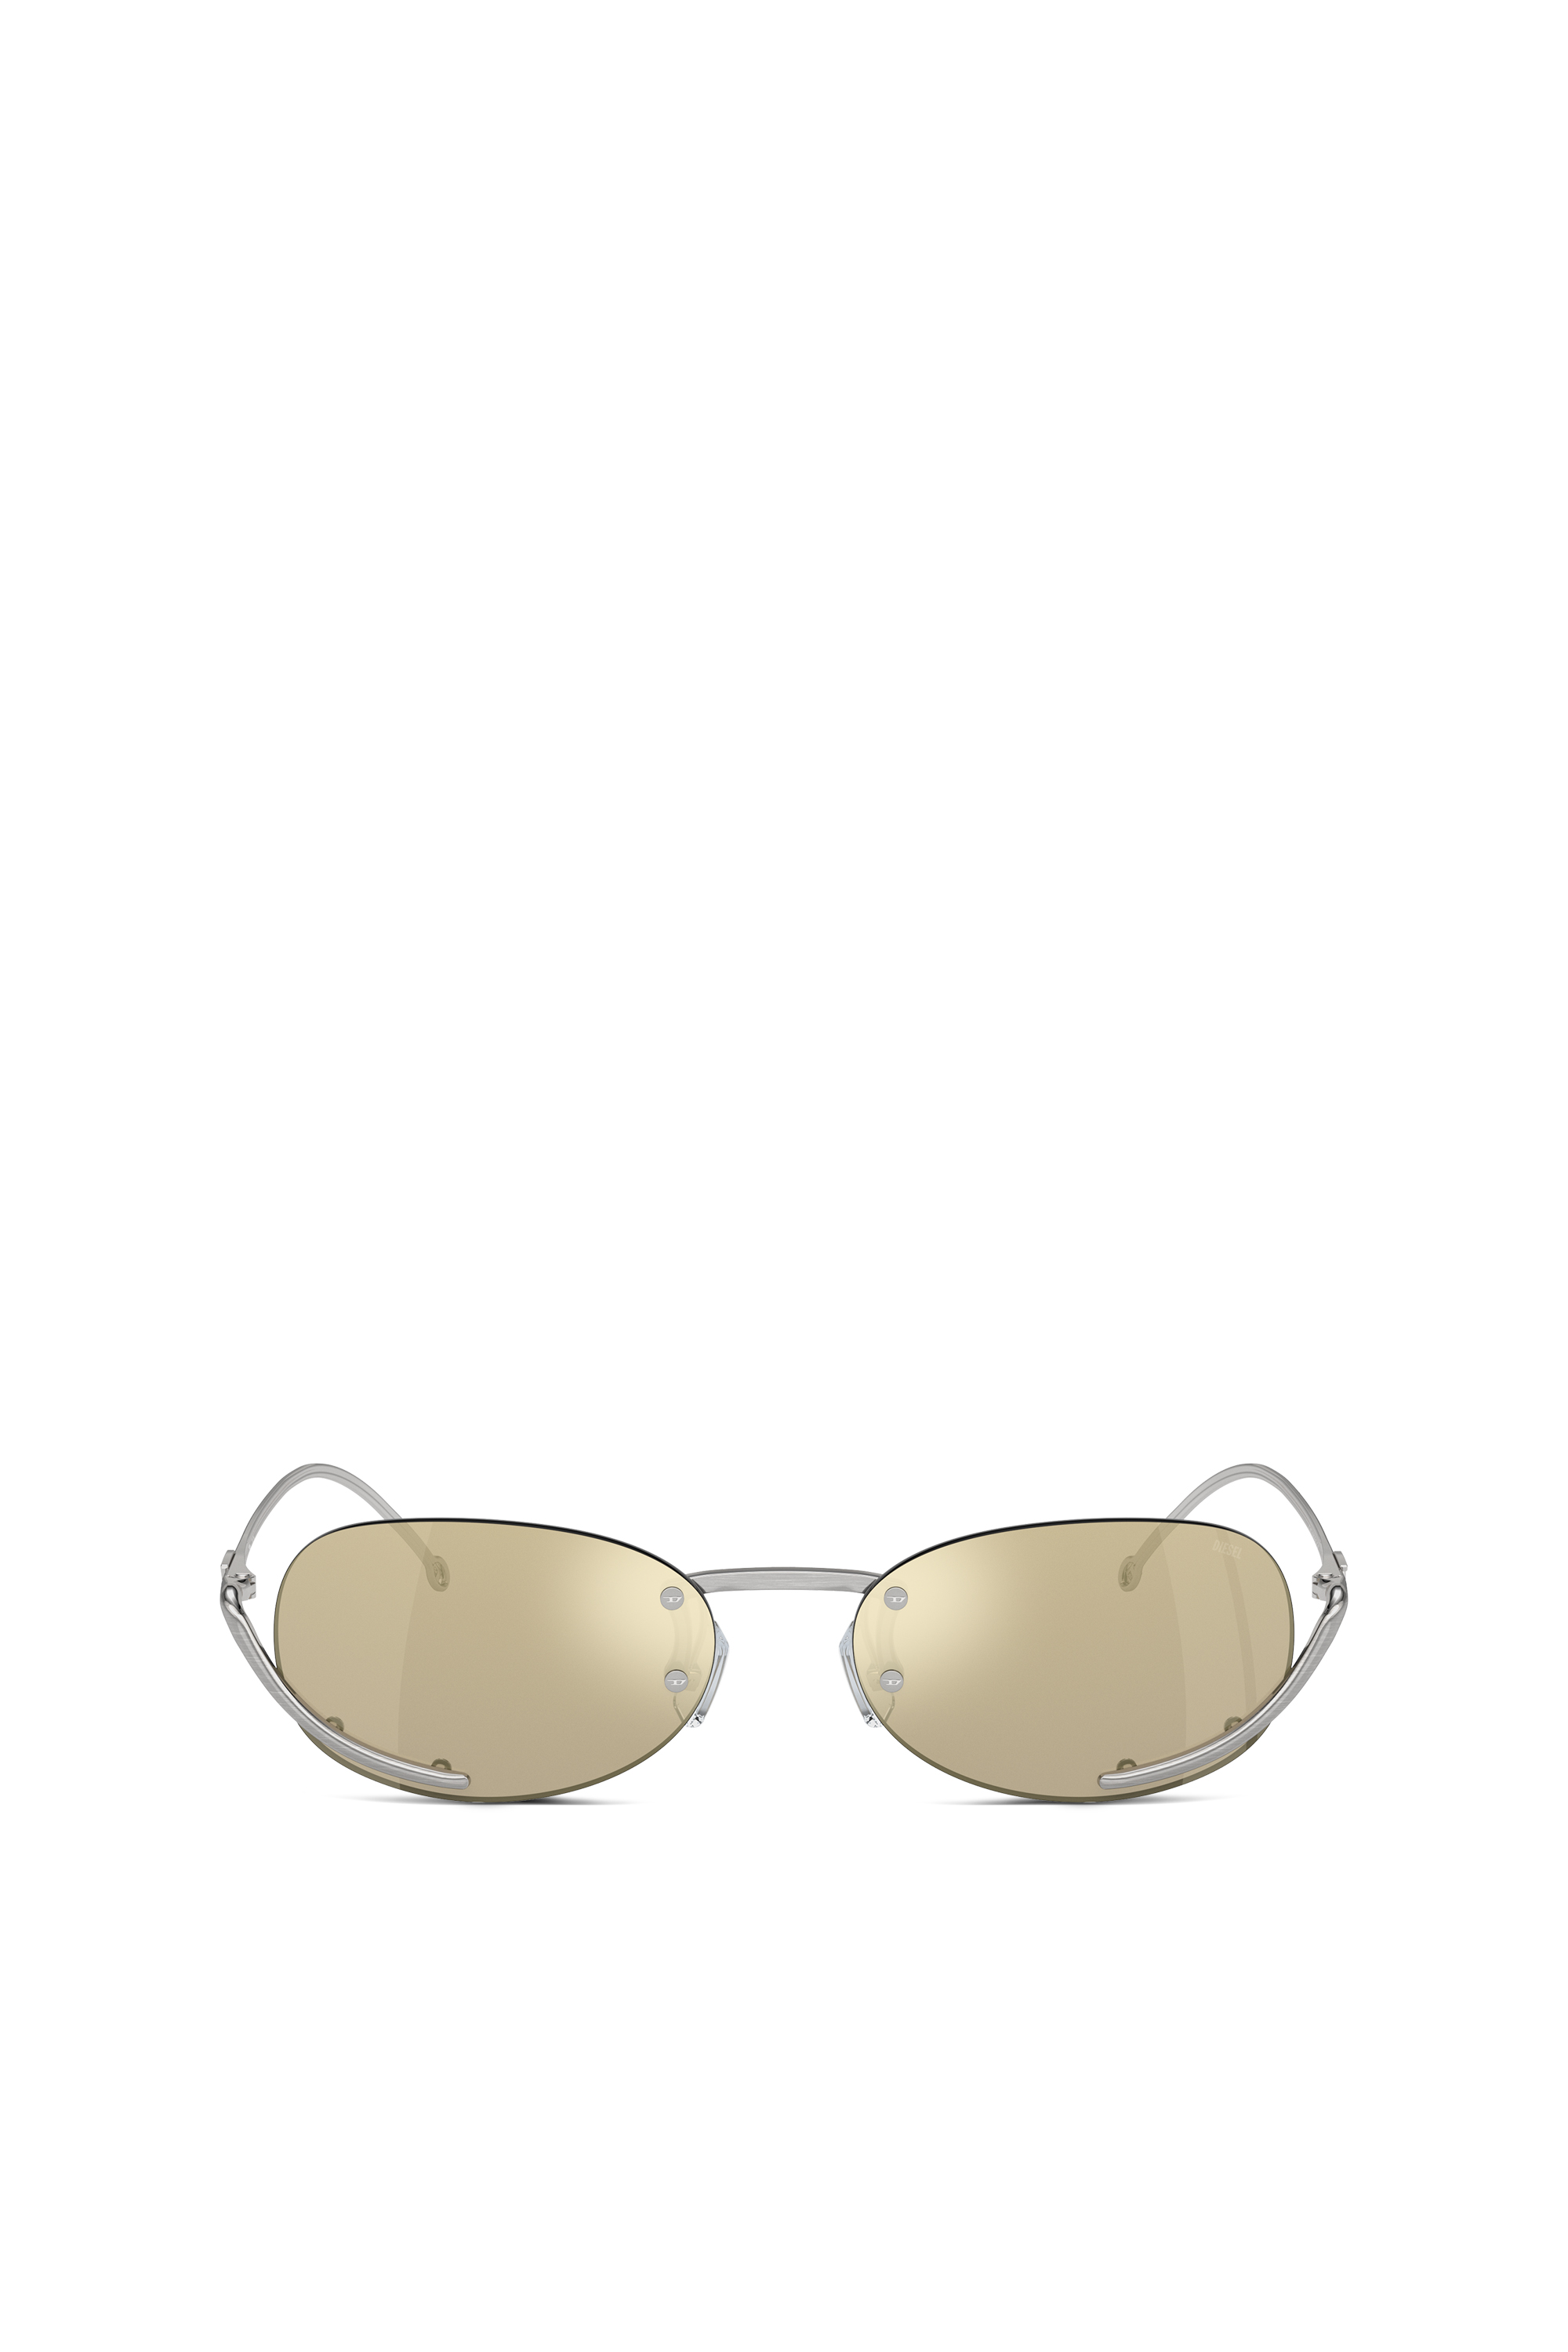 Diesel Oval Sunglasses In Giallo